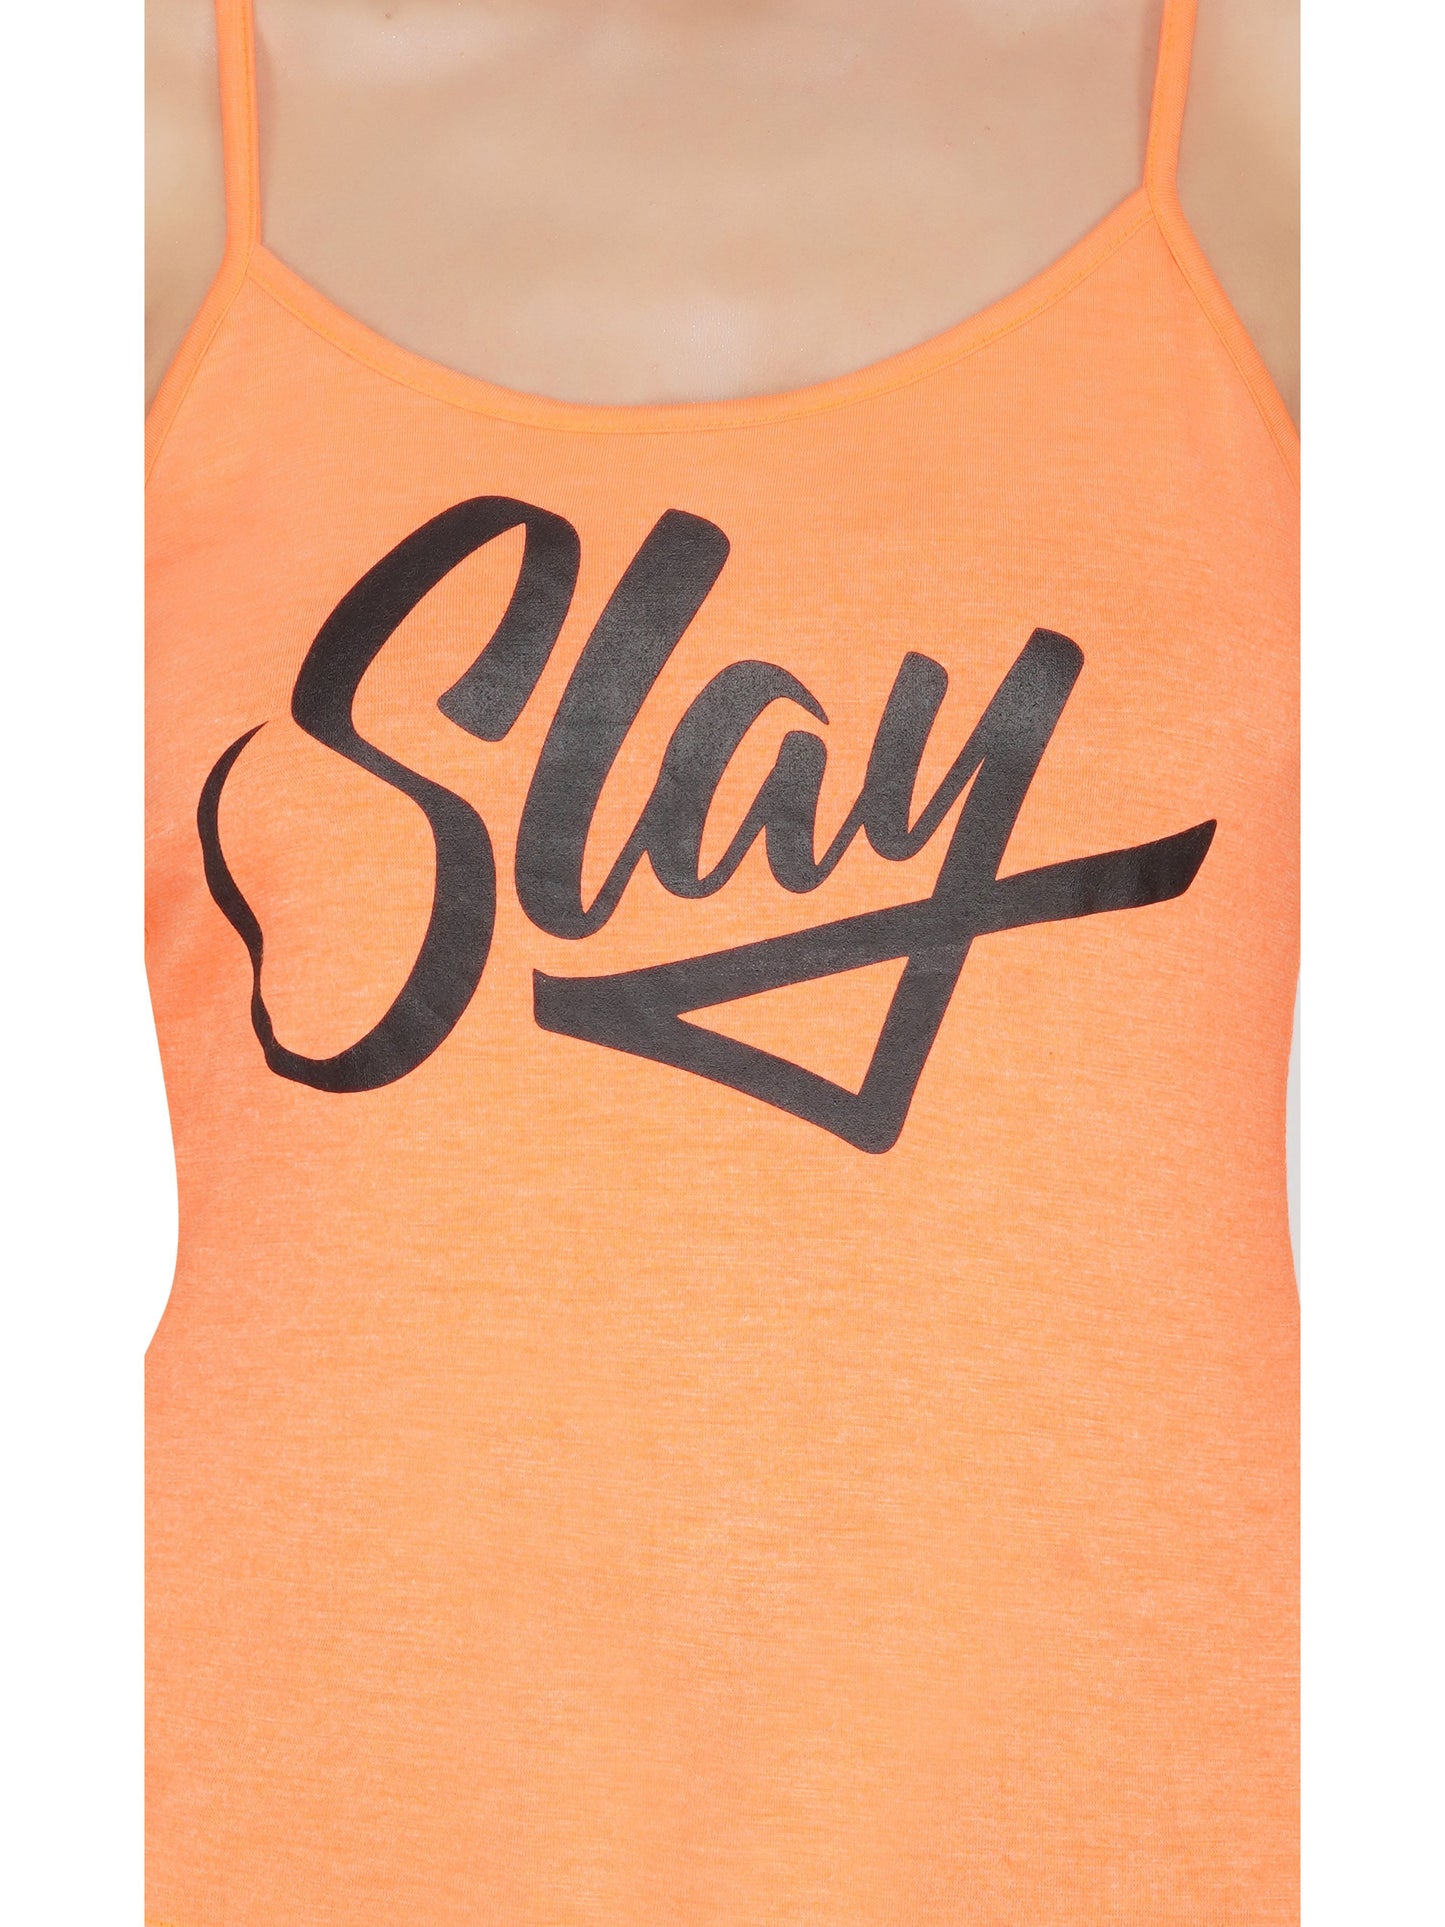 SLAY. Women's Neon Orange Printed Camisole-clothing-to-slay.myshopify.com-Camisole Top